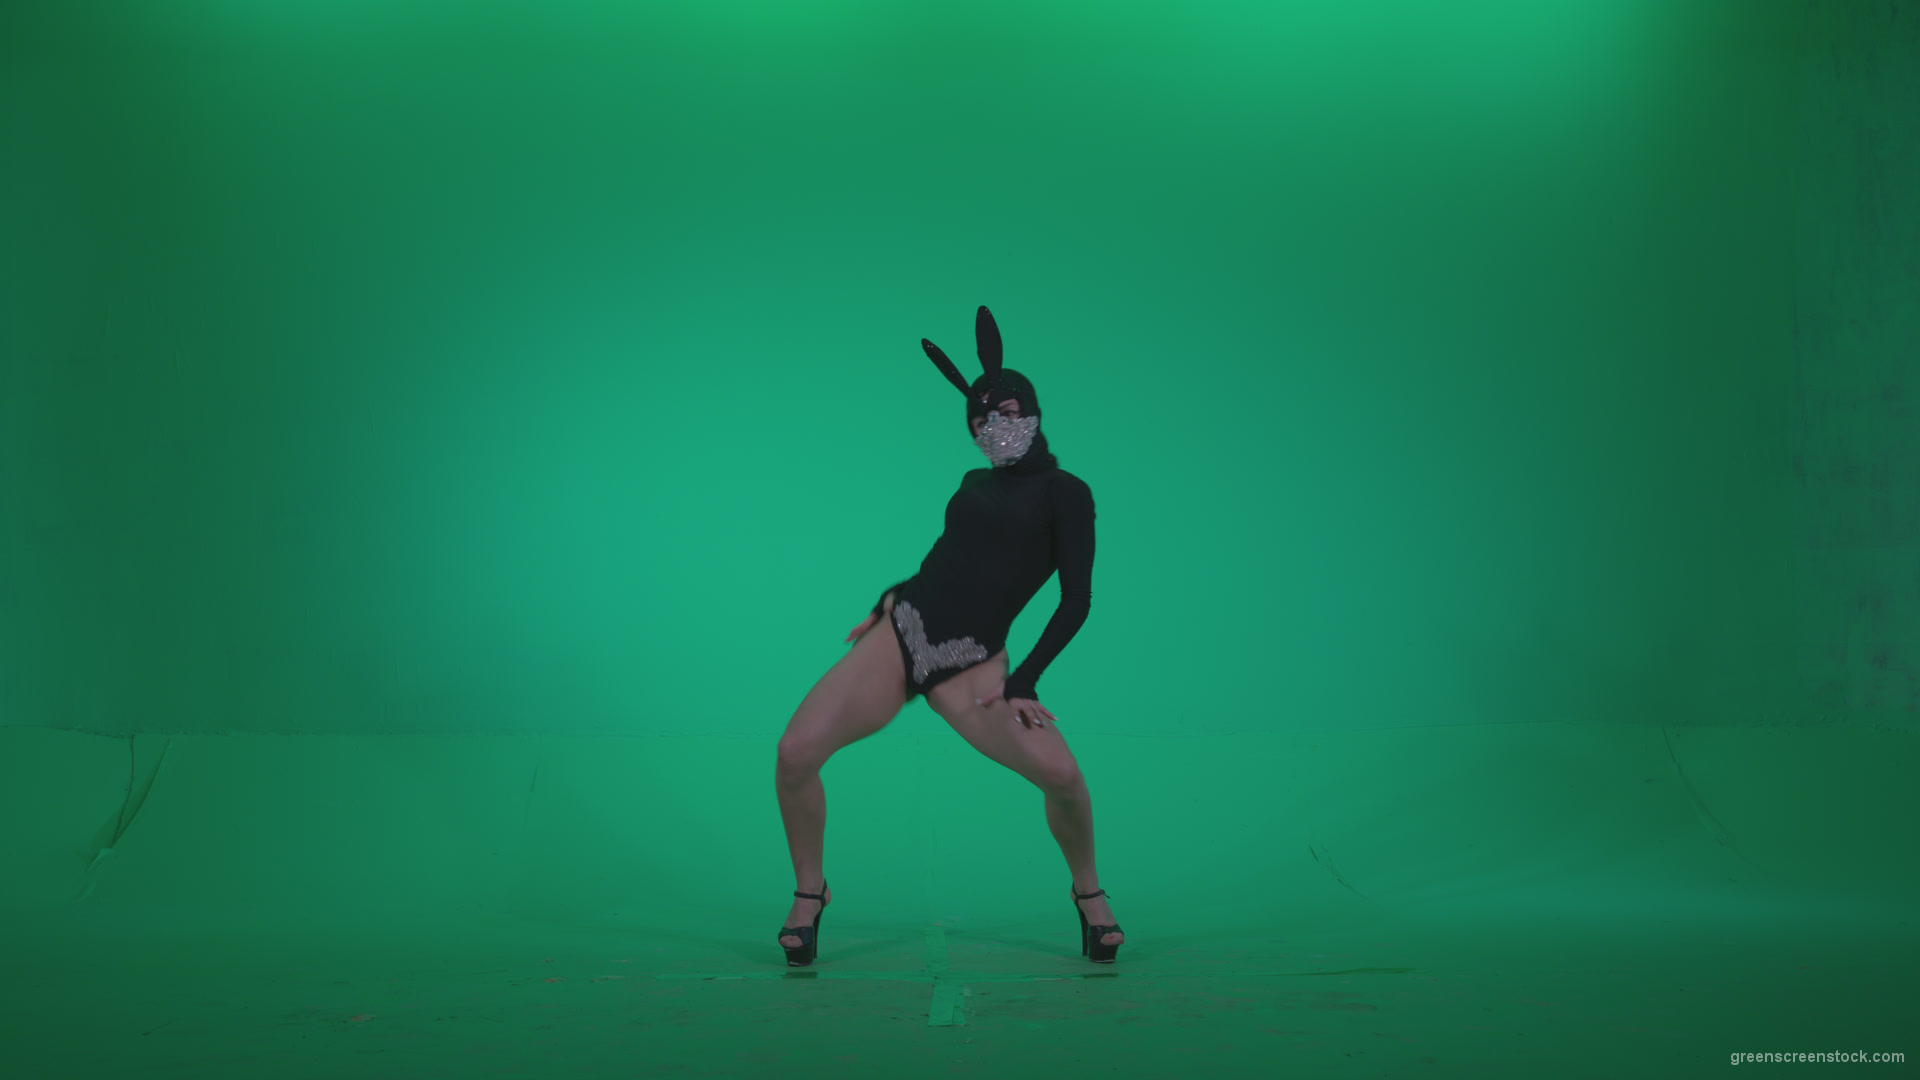 Go-go-Dancer-Black-Rabbit-u8-Green-Screen-Video-Footage_005 Green Screen Stock